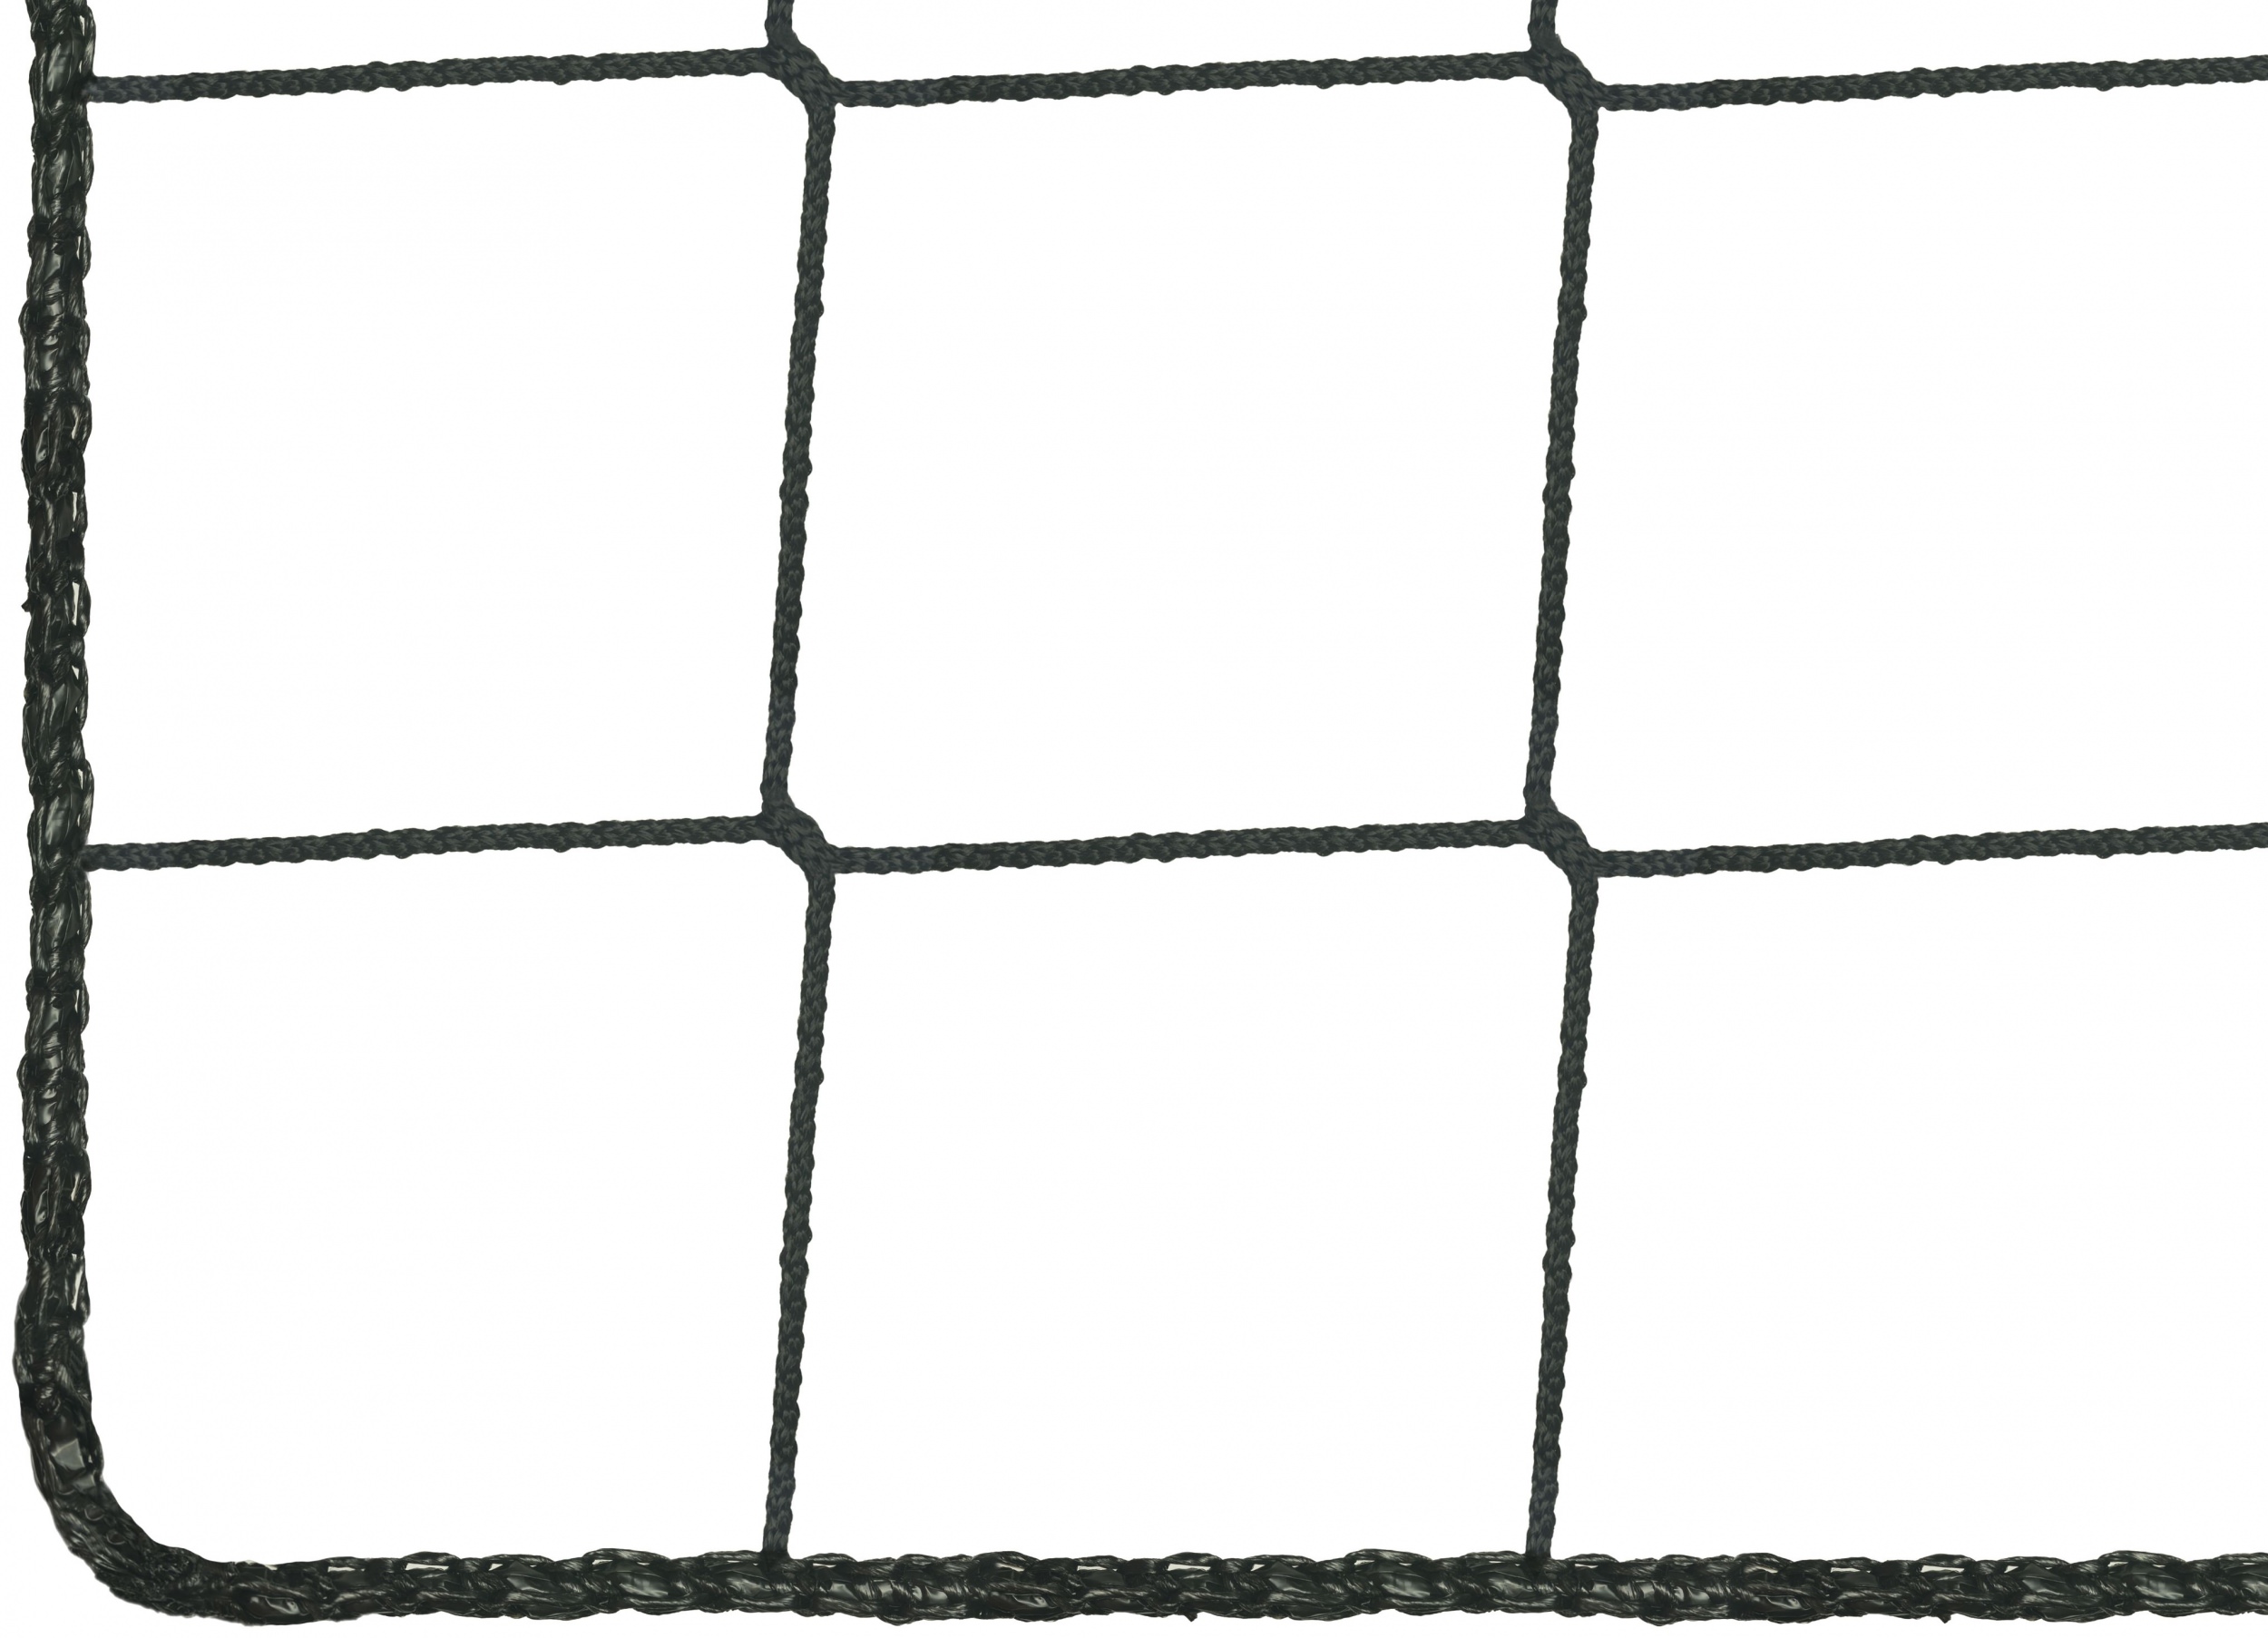 PROFI Ballfangnetz blau-weiß 4,50m Höhe Kordel 4mm Fangnetz Länge wählbar 